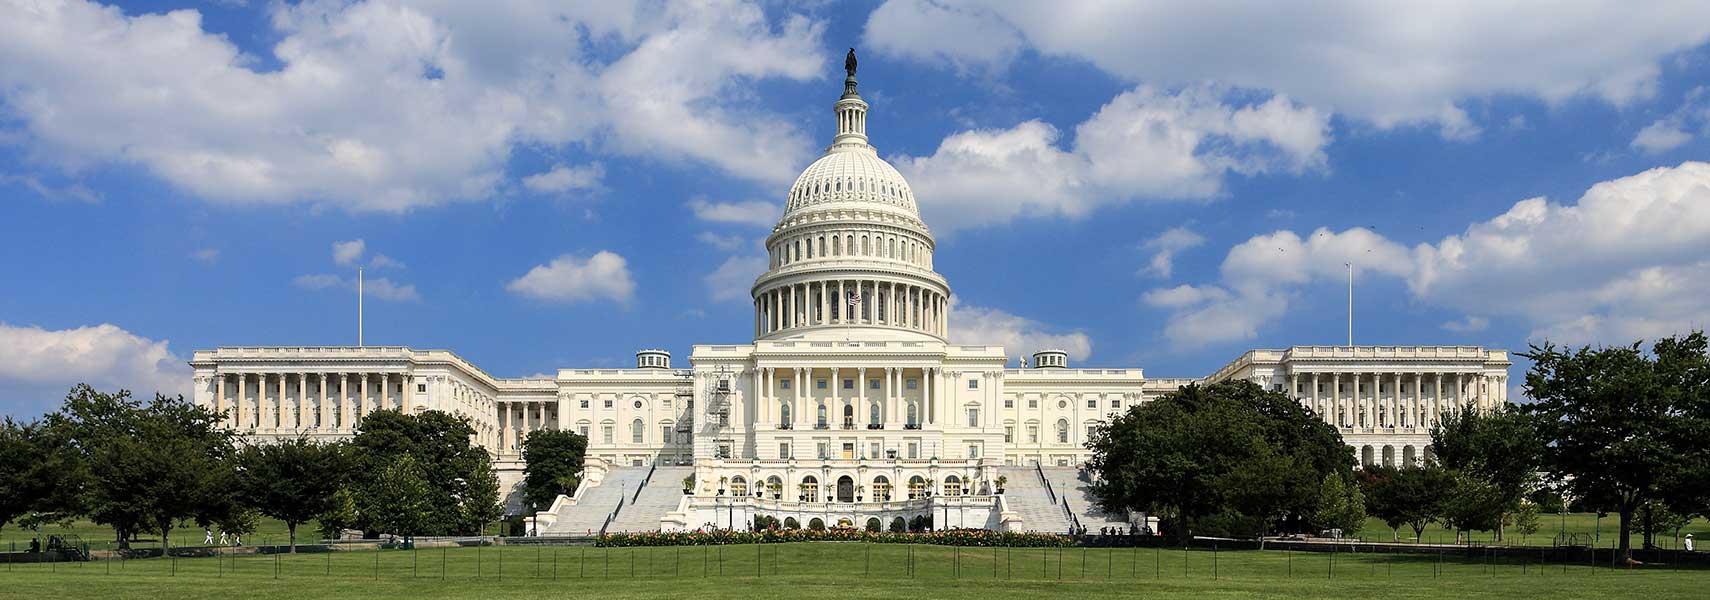 United States Capitol in Washington D.C., USA